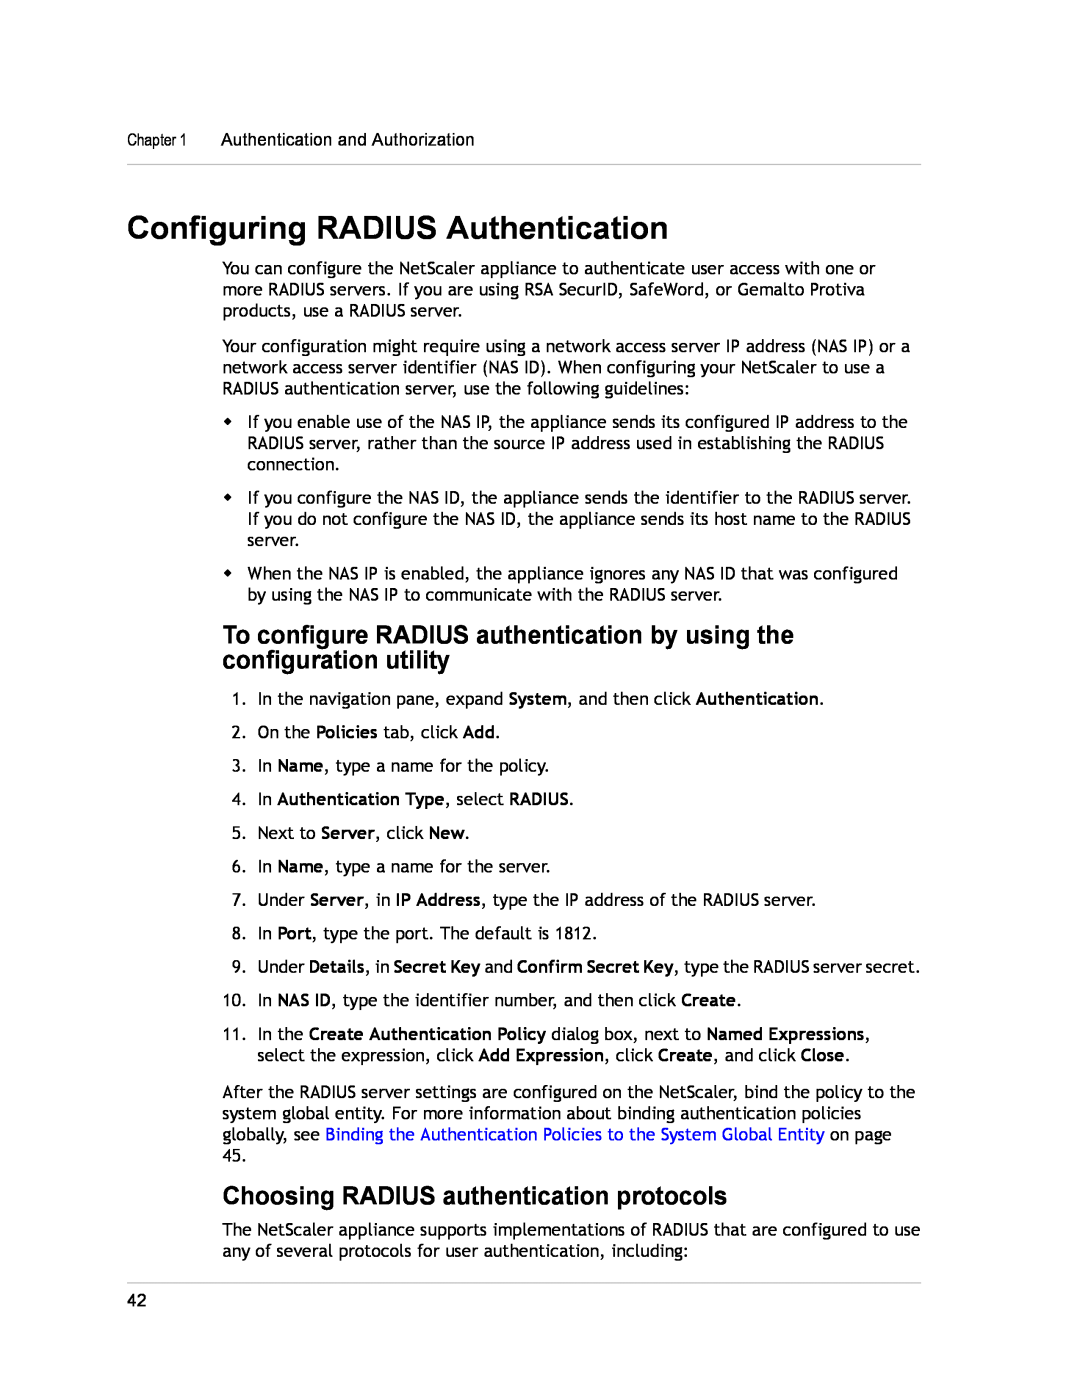 Citrix Systems CITRIX NETSCALER 9.3 manual Configuring RADIUS Authentication, Choosing RADIUS authentication protocols 